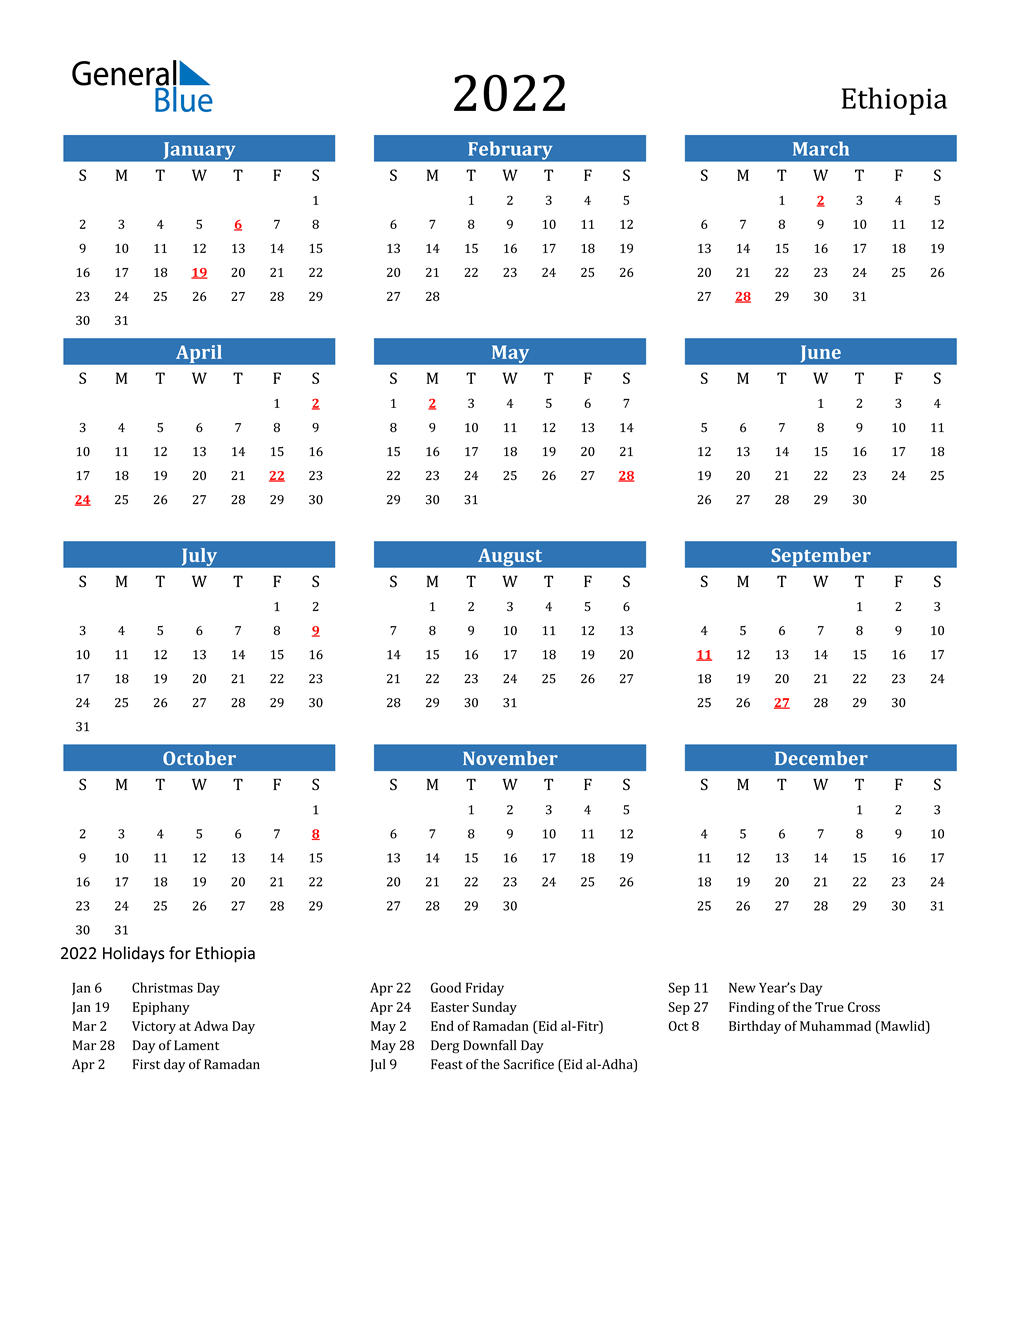 Ethiopian Fasting Calendar 2022 2022 Ethiopia Calendar With Holidays